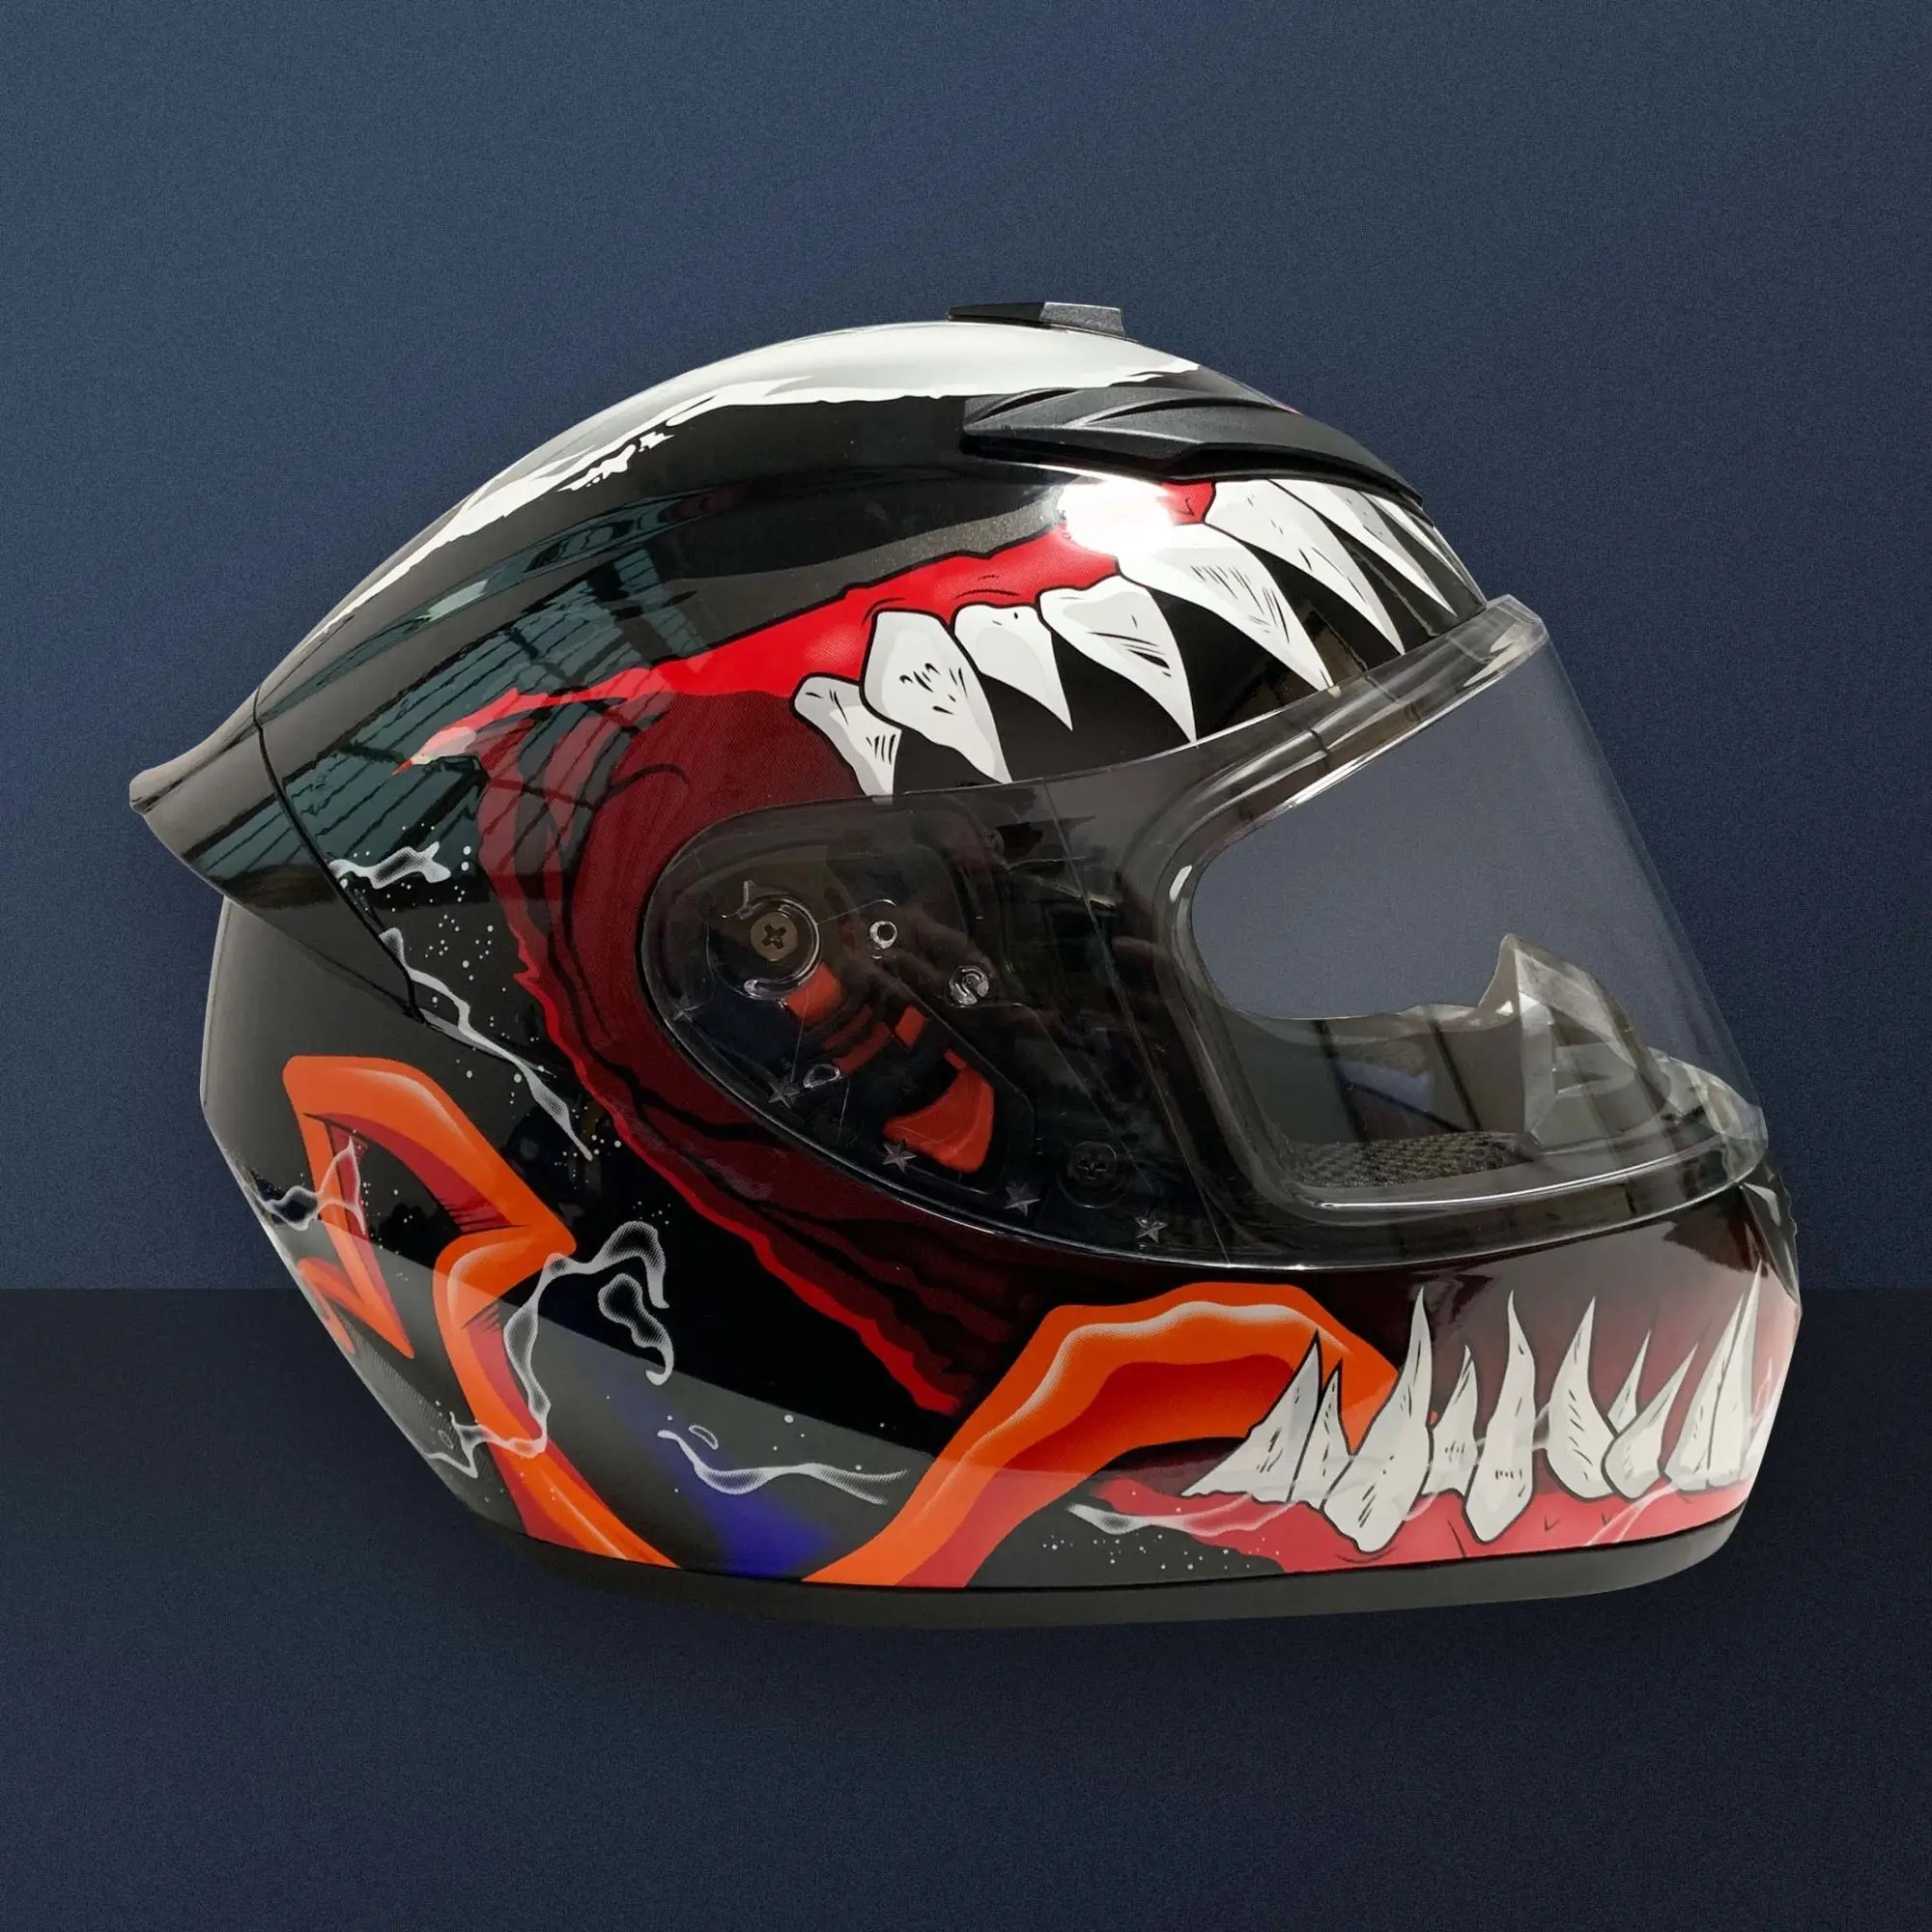 Venom Full Face Motorcycle Helmet High Definition Anti-fog Lens Removable Lining Racing Ultraviolet Protection Universal Helmet enlarge